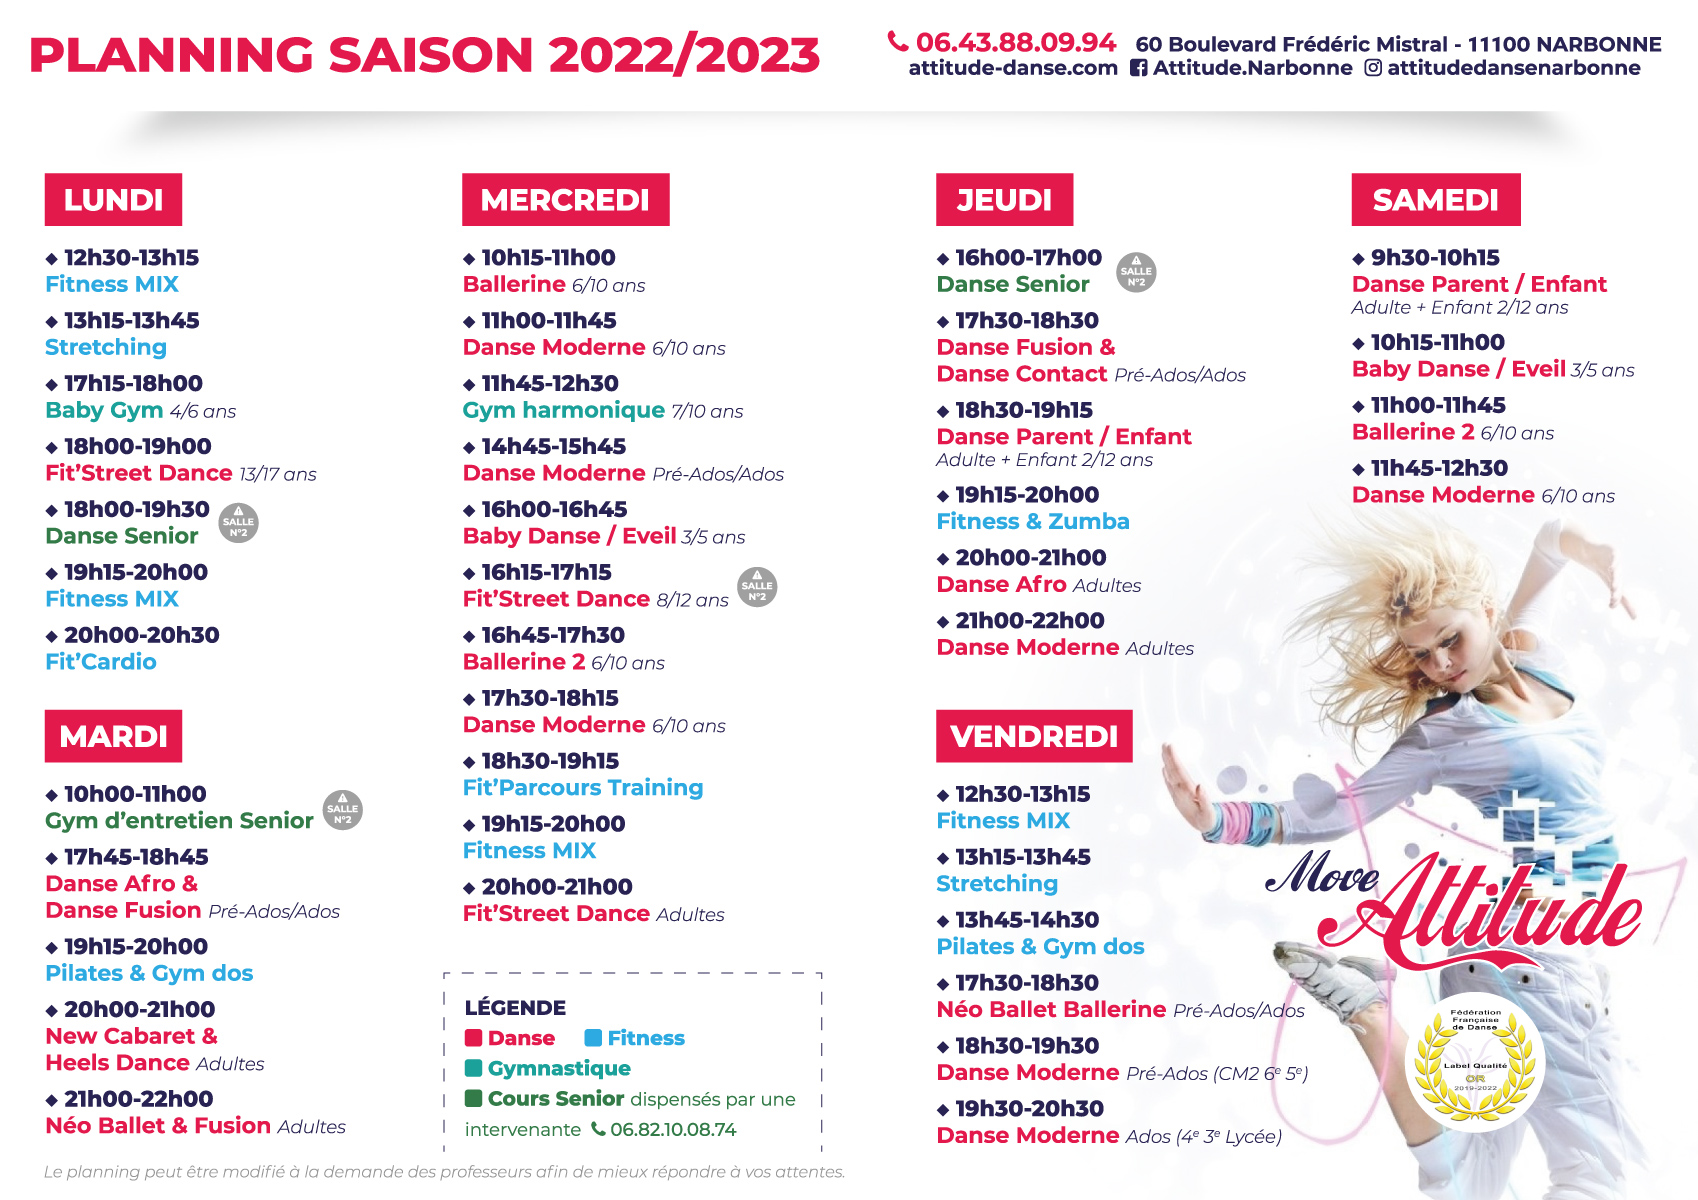 Planning Attitude Danse Narbonne 2022-2023